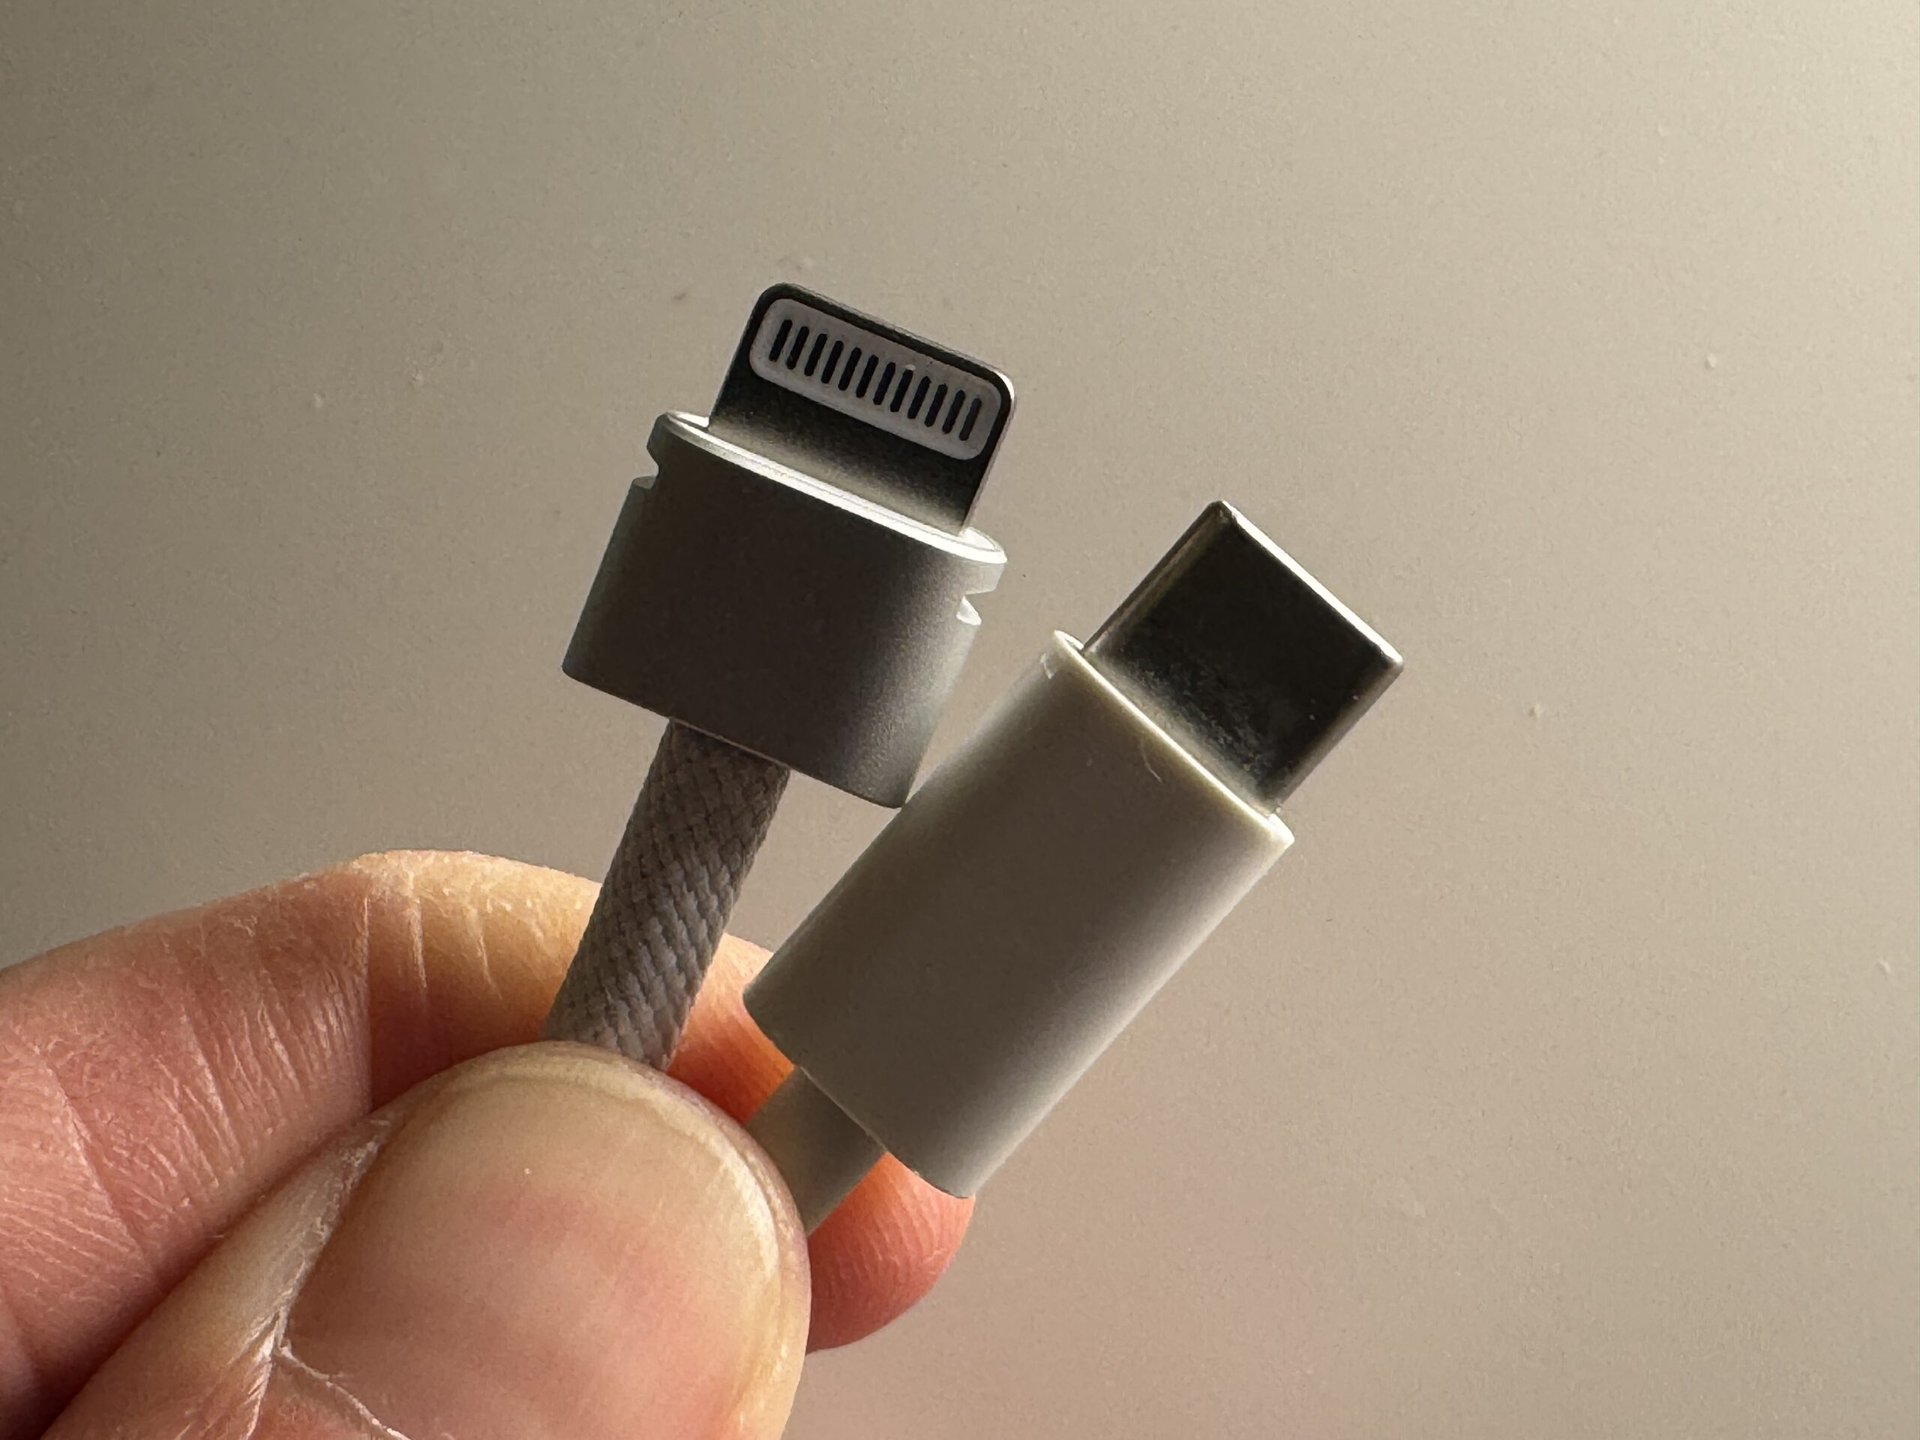 Apple Vision Pro lightning connector vs regular USB C connector